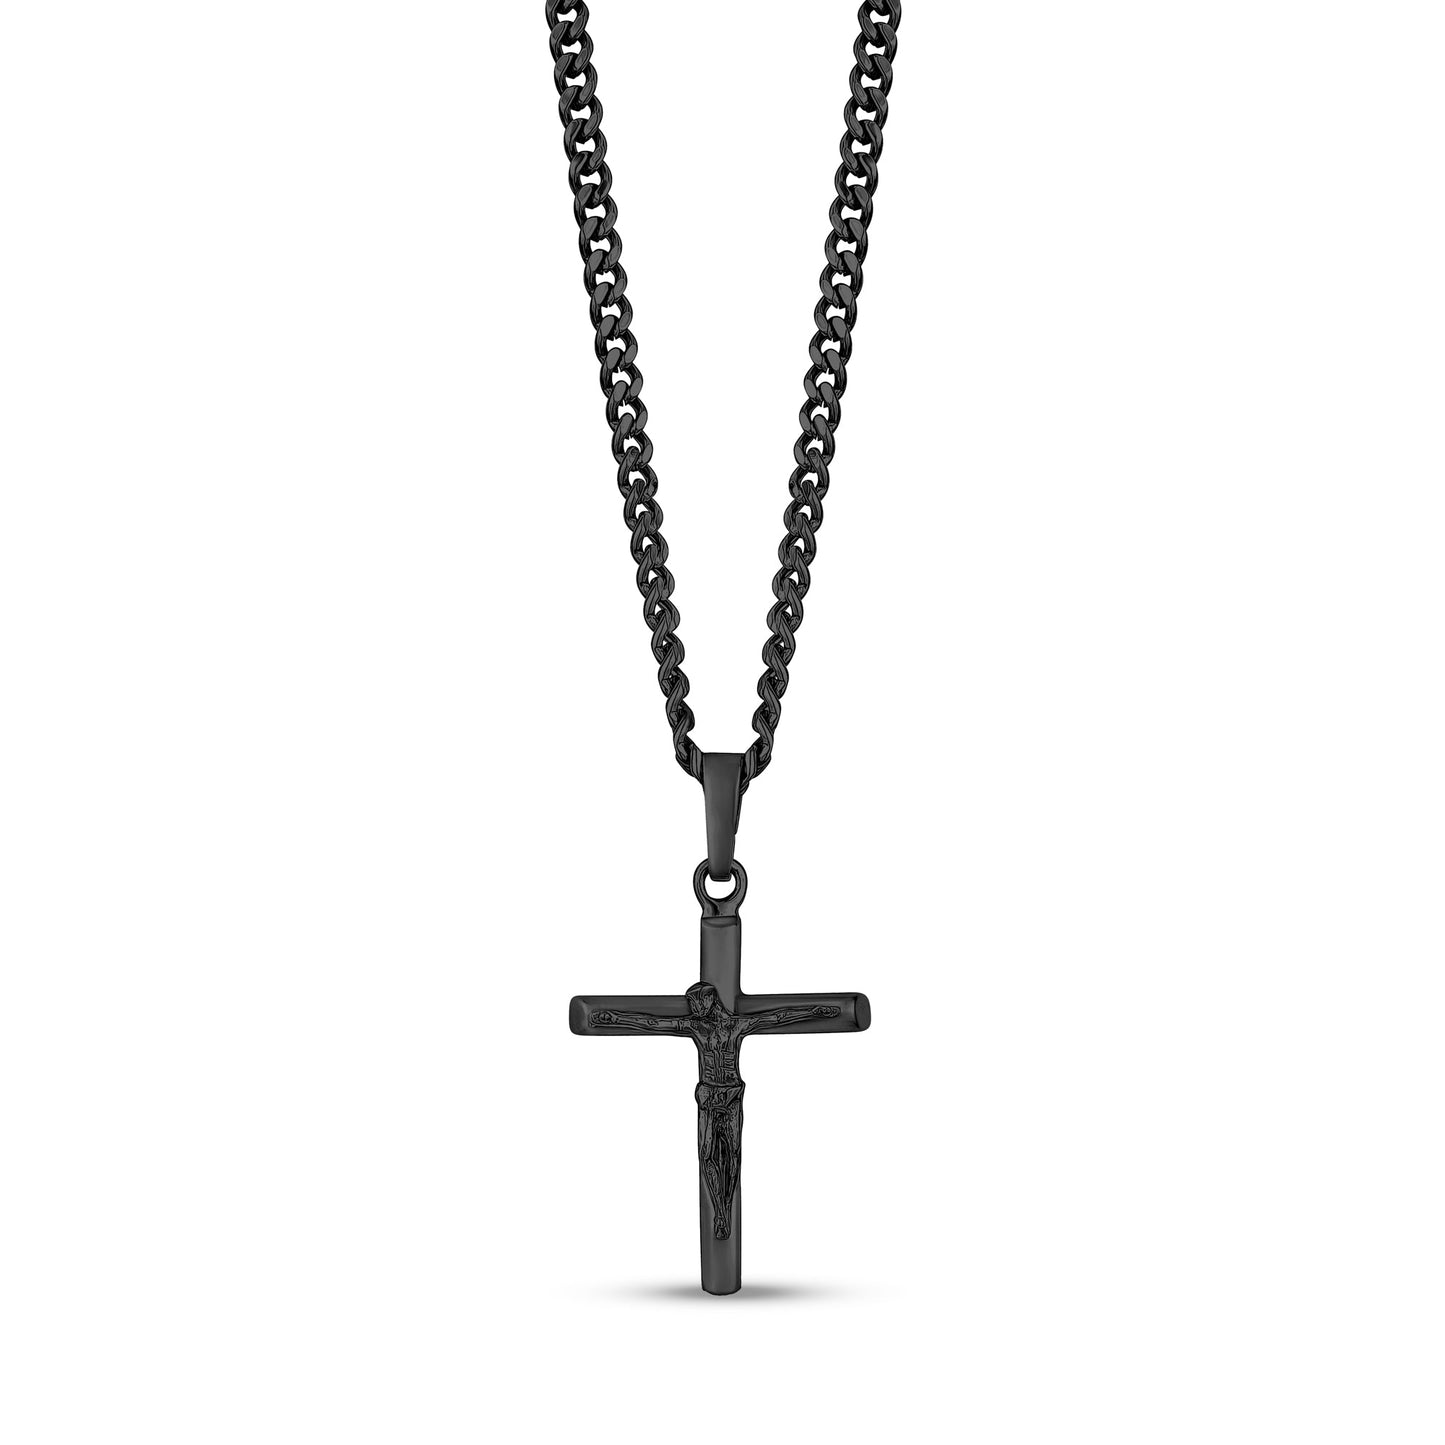 Crucifix Cross Necklace 50cm